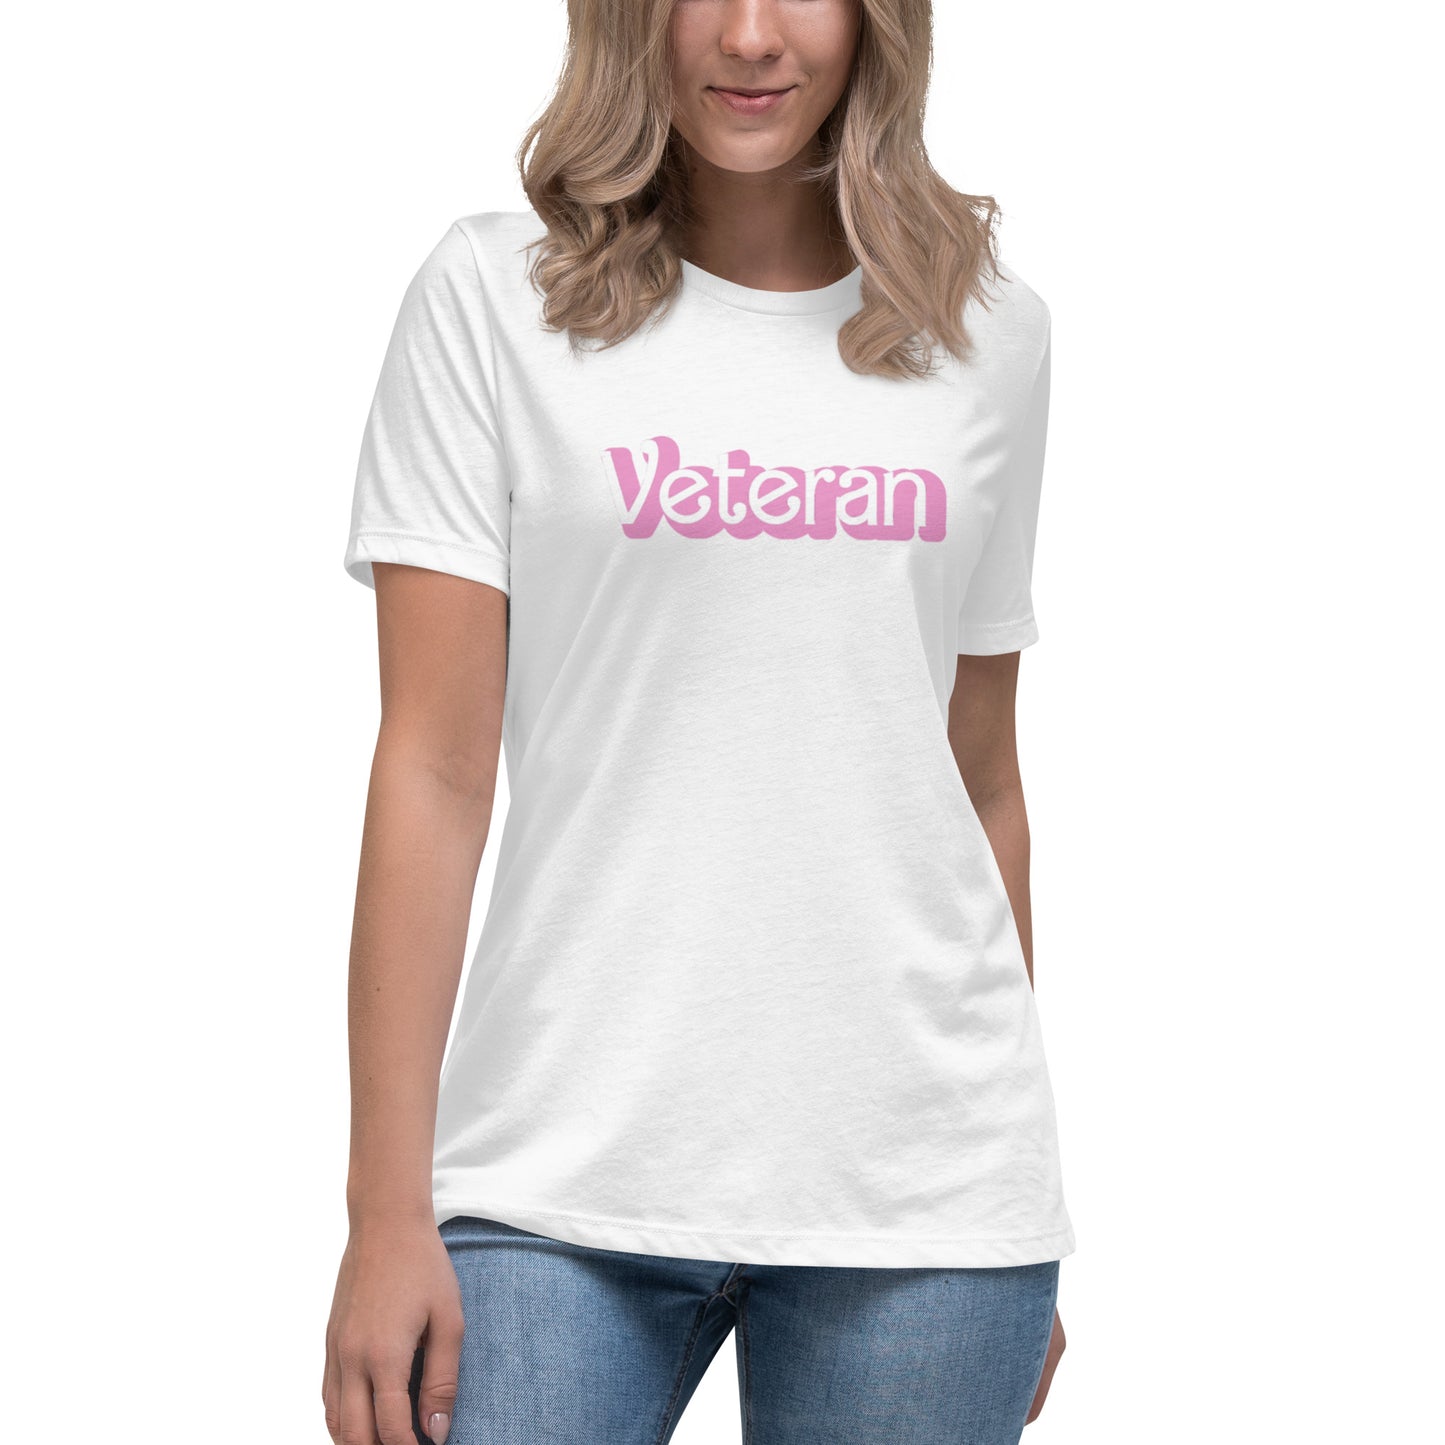 Women's Relaxed "Veteran" Pink T-Shirt (Choose White, Dark or Lt Pink)